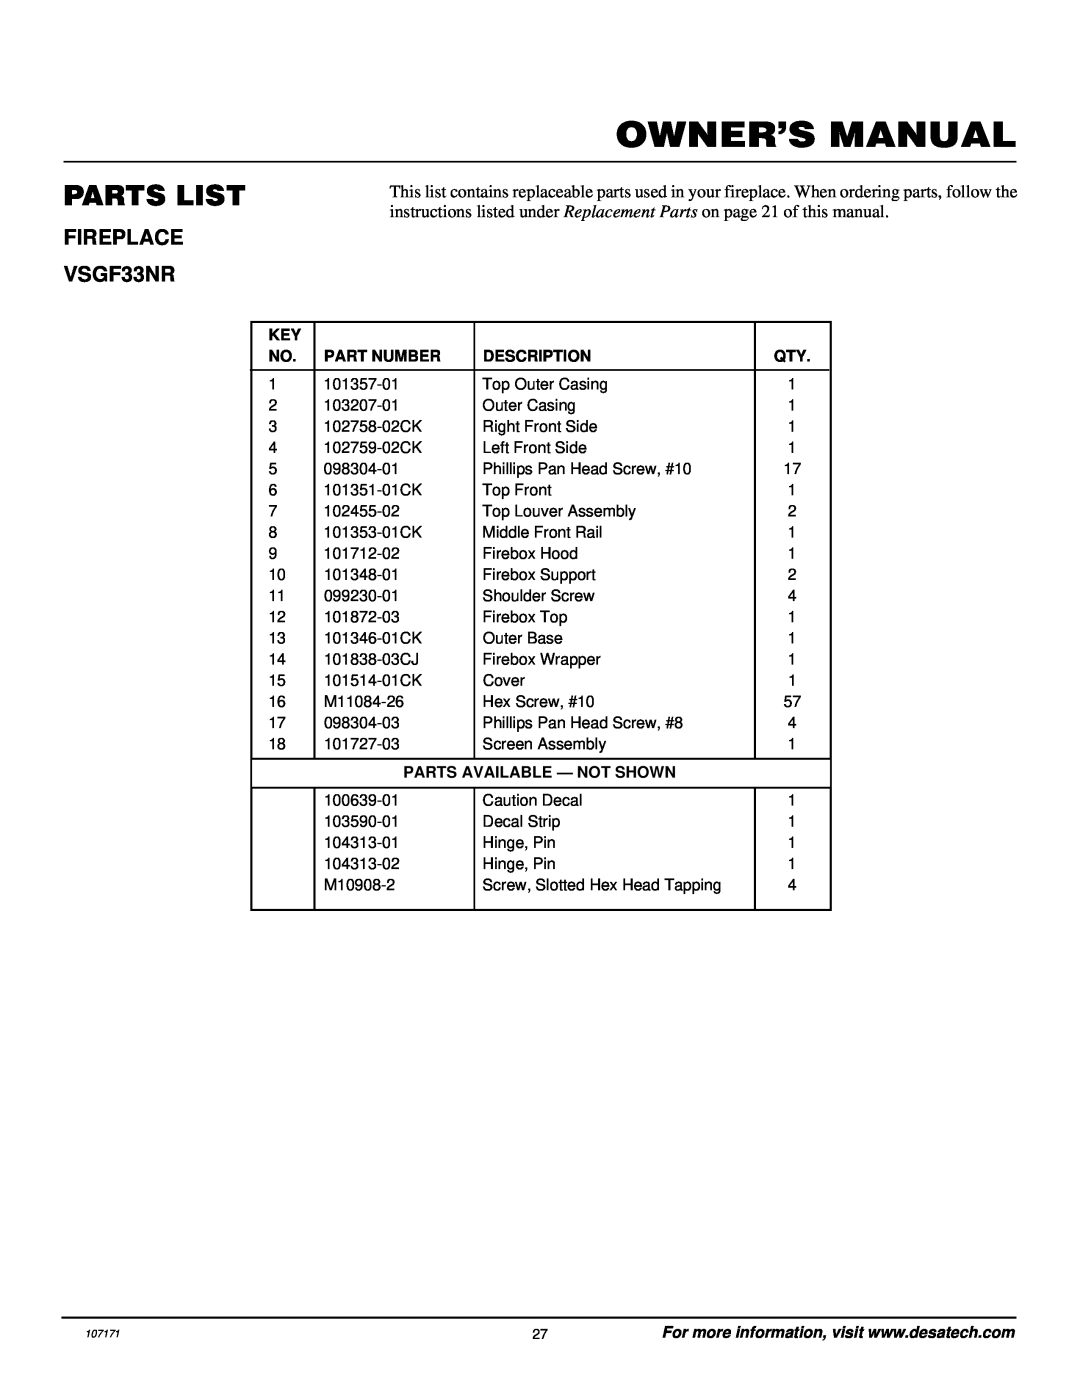 Desa installation manual Parts List, FIREPLACE VSGF33NR, Part Number, Description, Parts Available - Not Shown 